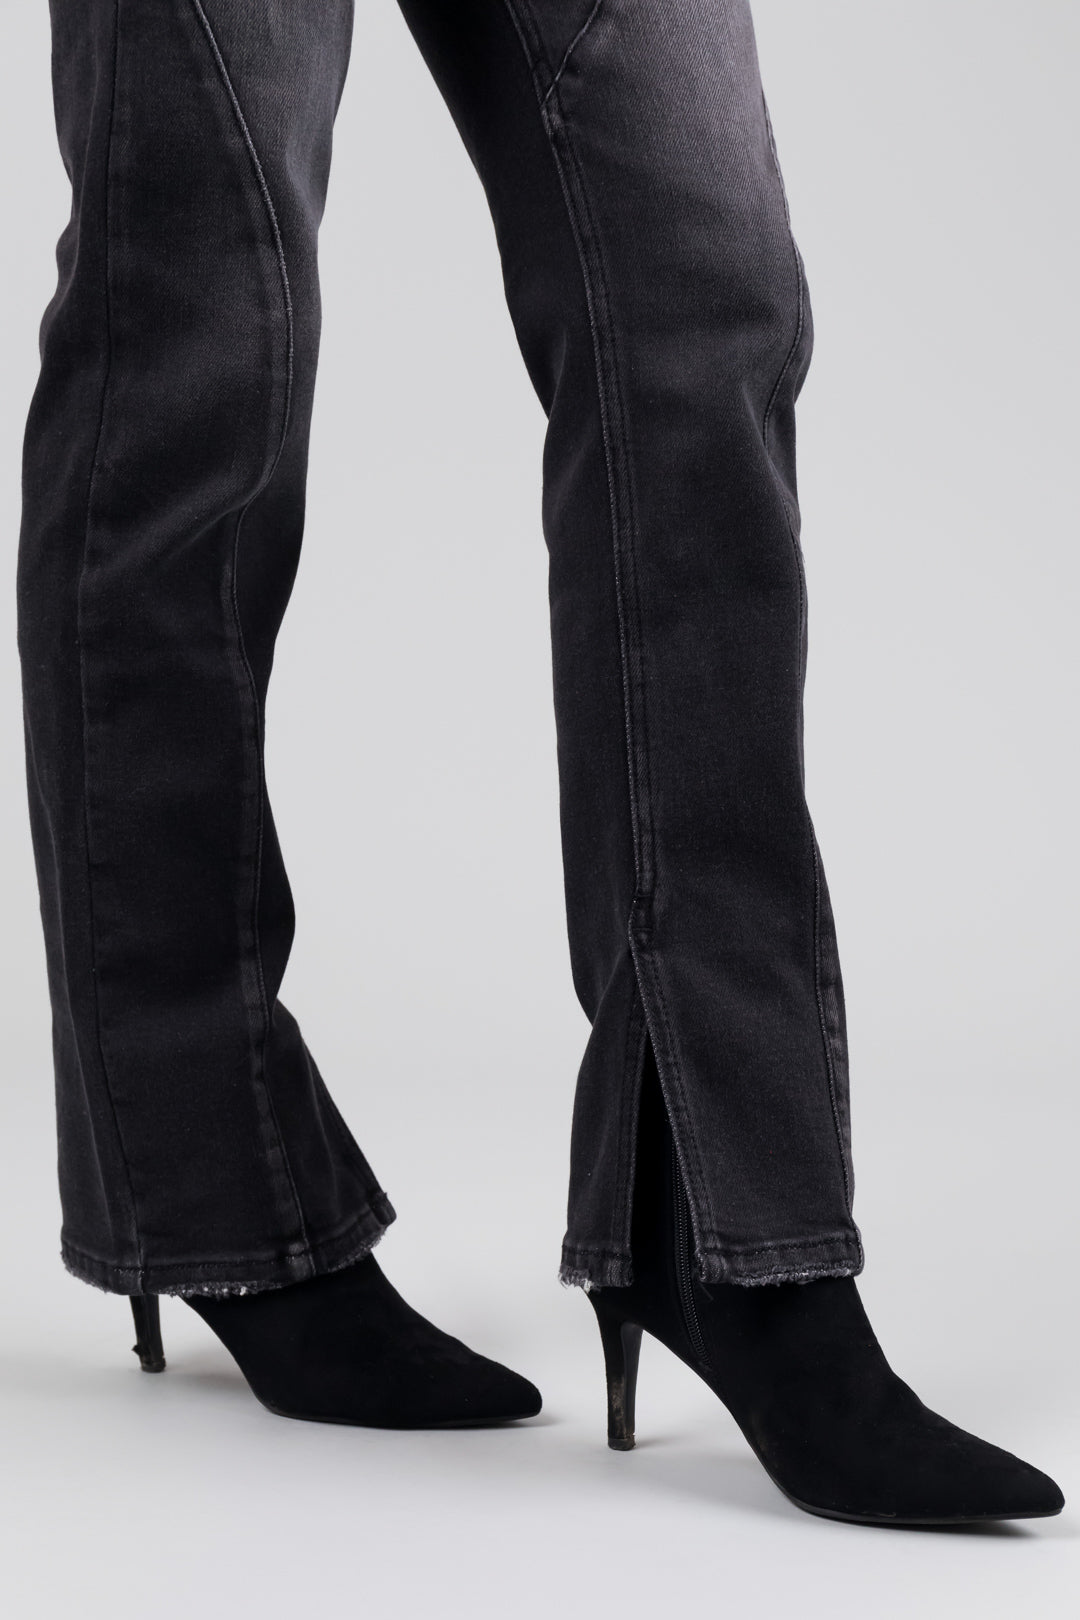 KanCan Black Straight Leg Seam Detail Jeans